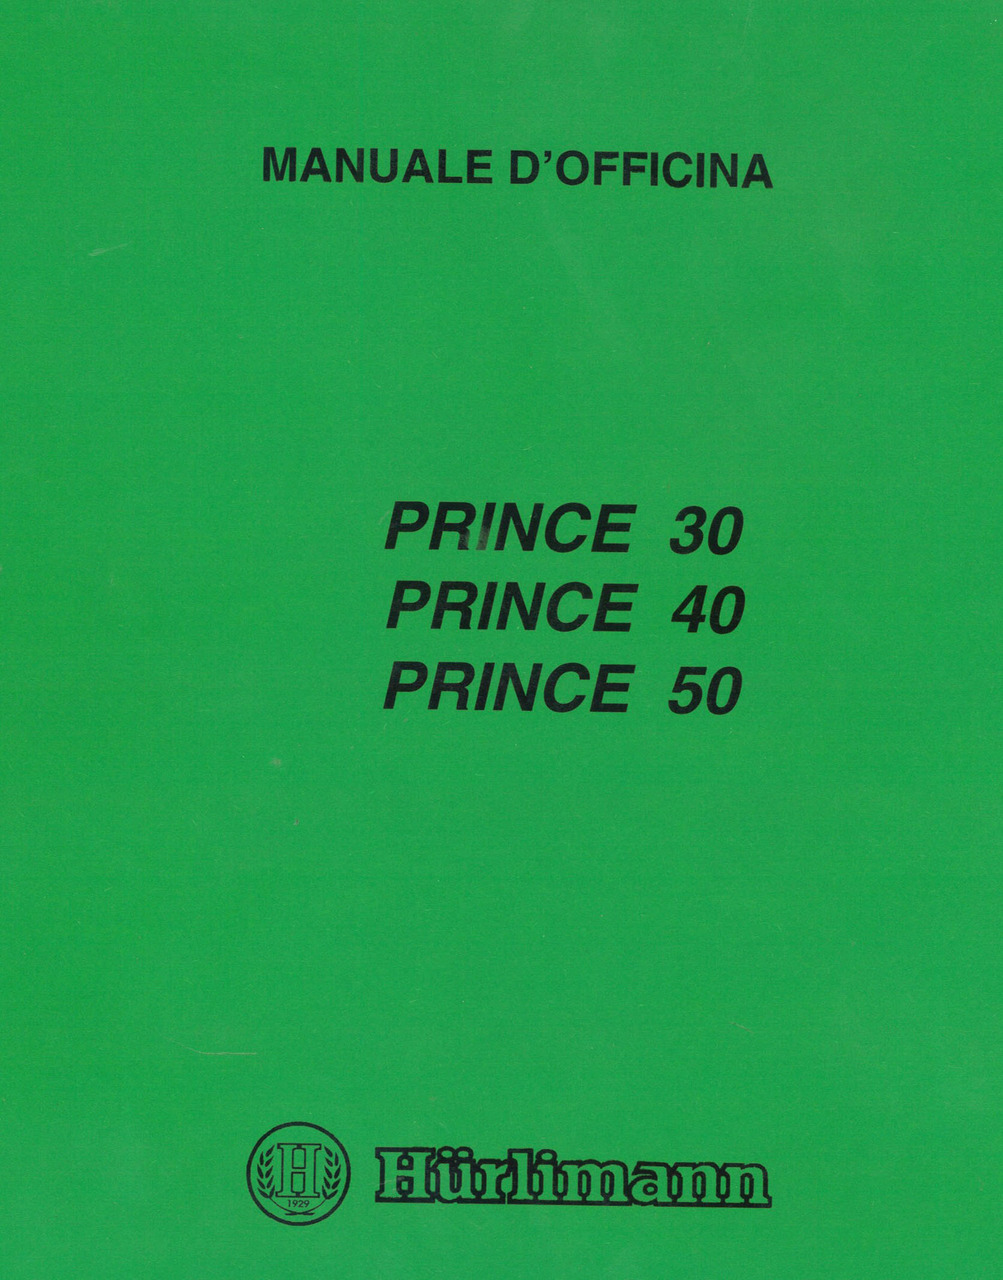 PRINCE 30 - 40 - 50 - Manuale d'officina (2003 dicembre)